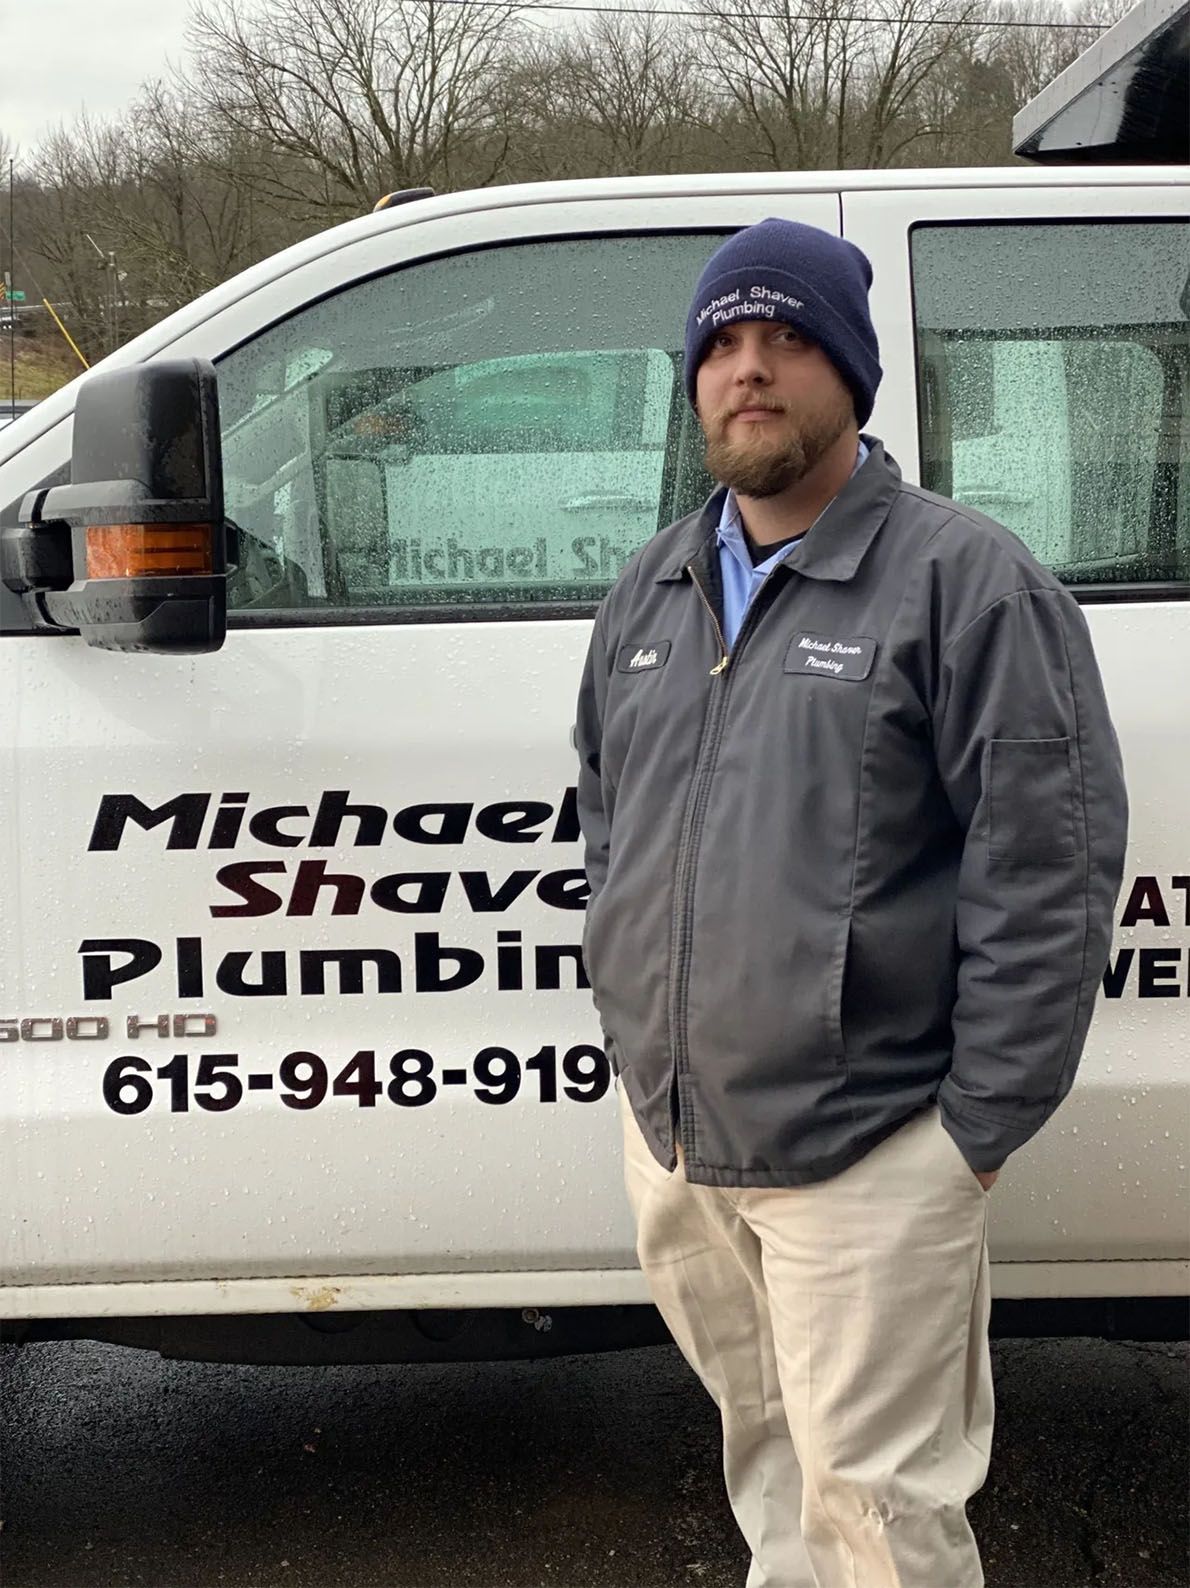 Austin R. — Bethpage, TN — Michael Shaver Plumbing & Septic Pumping